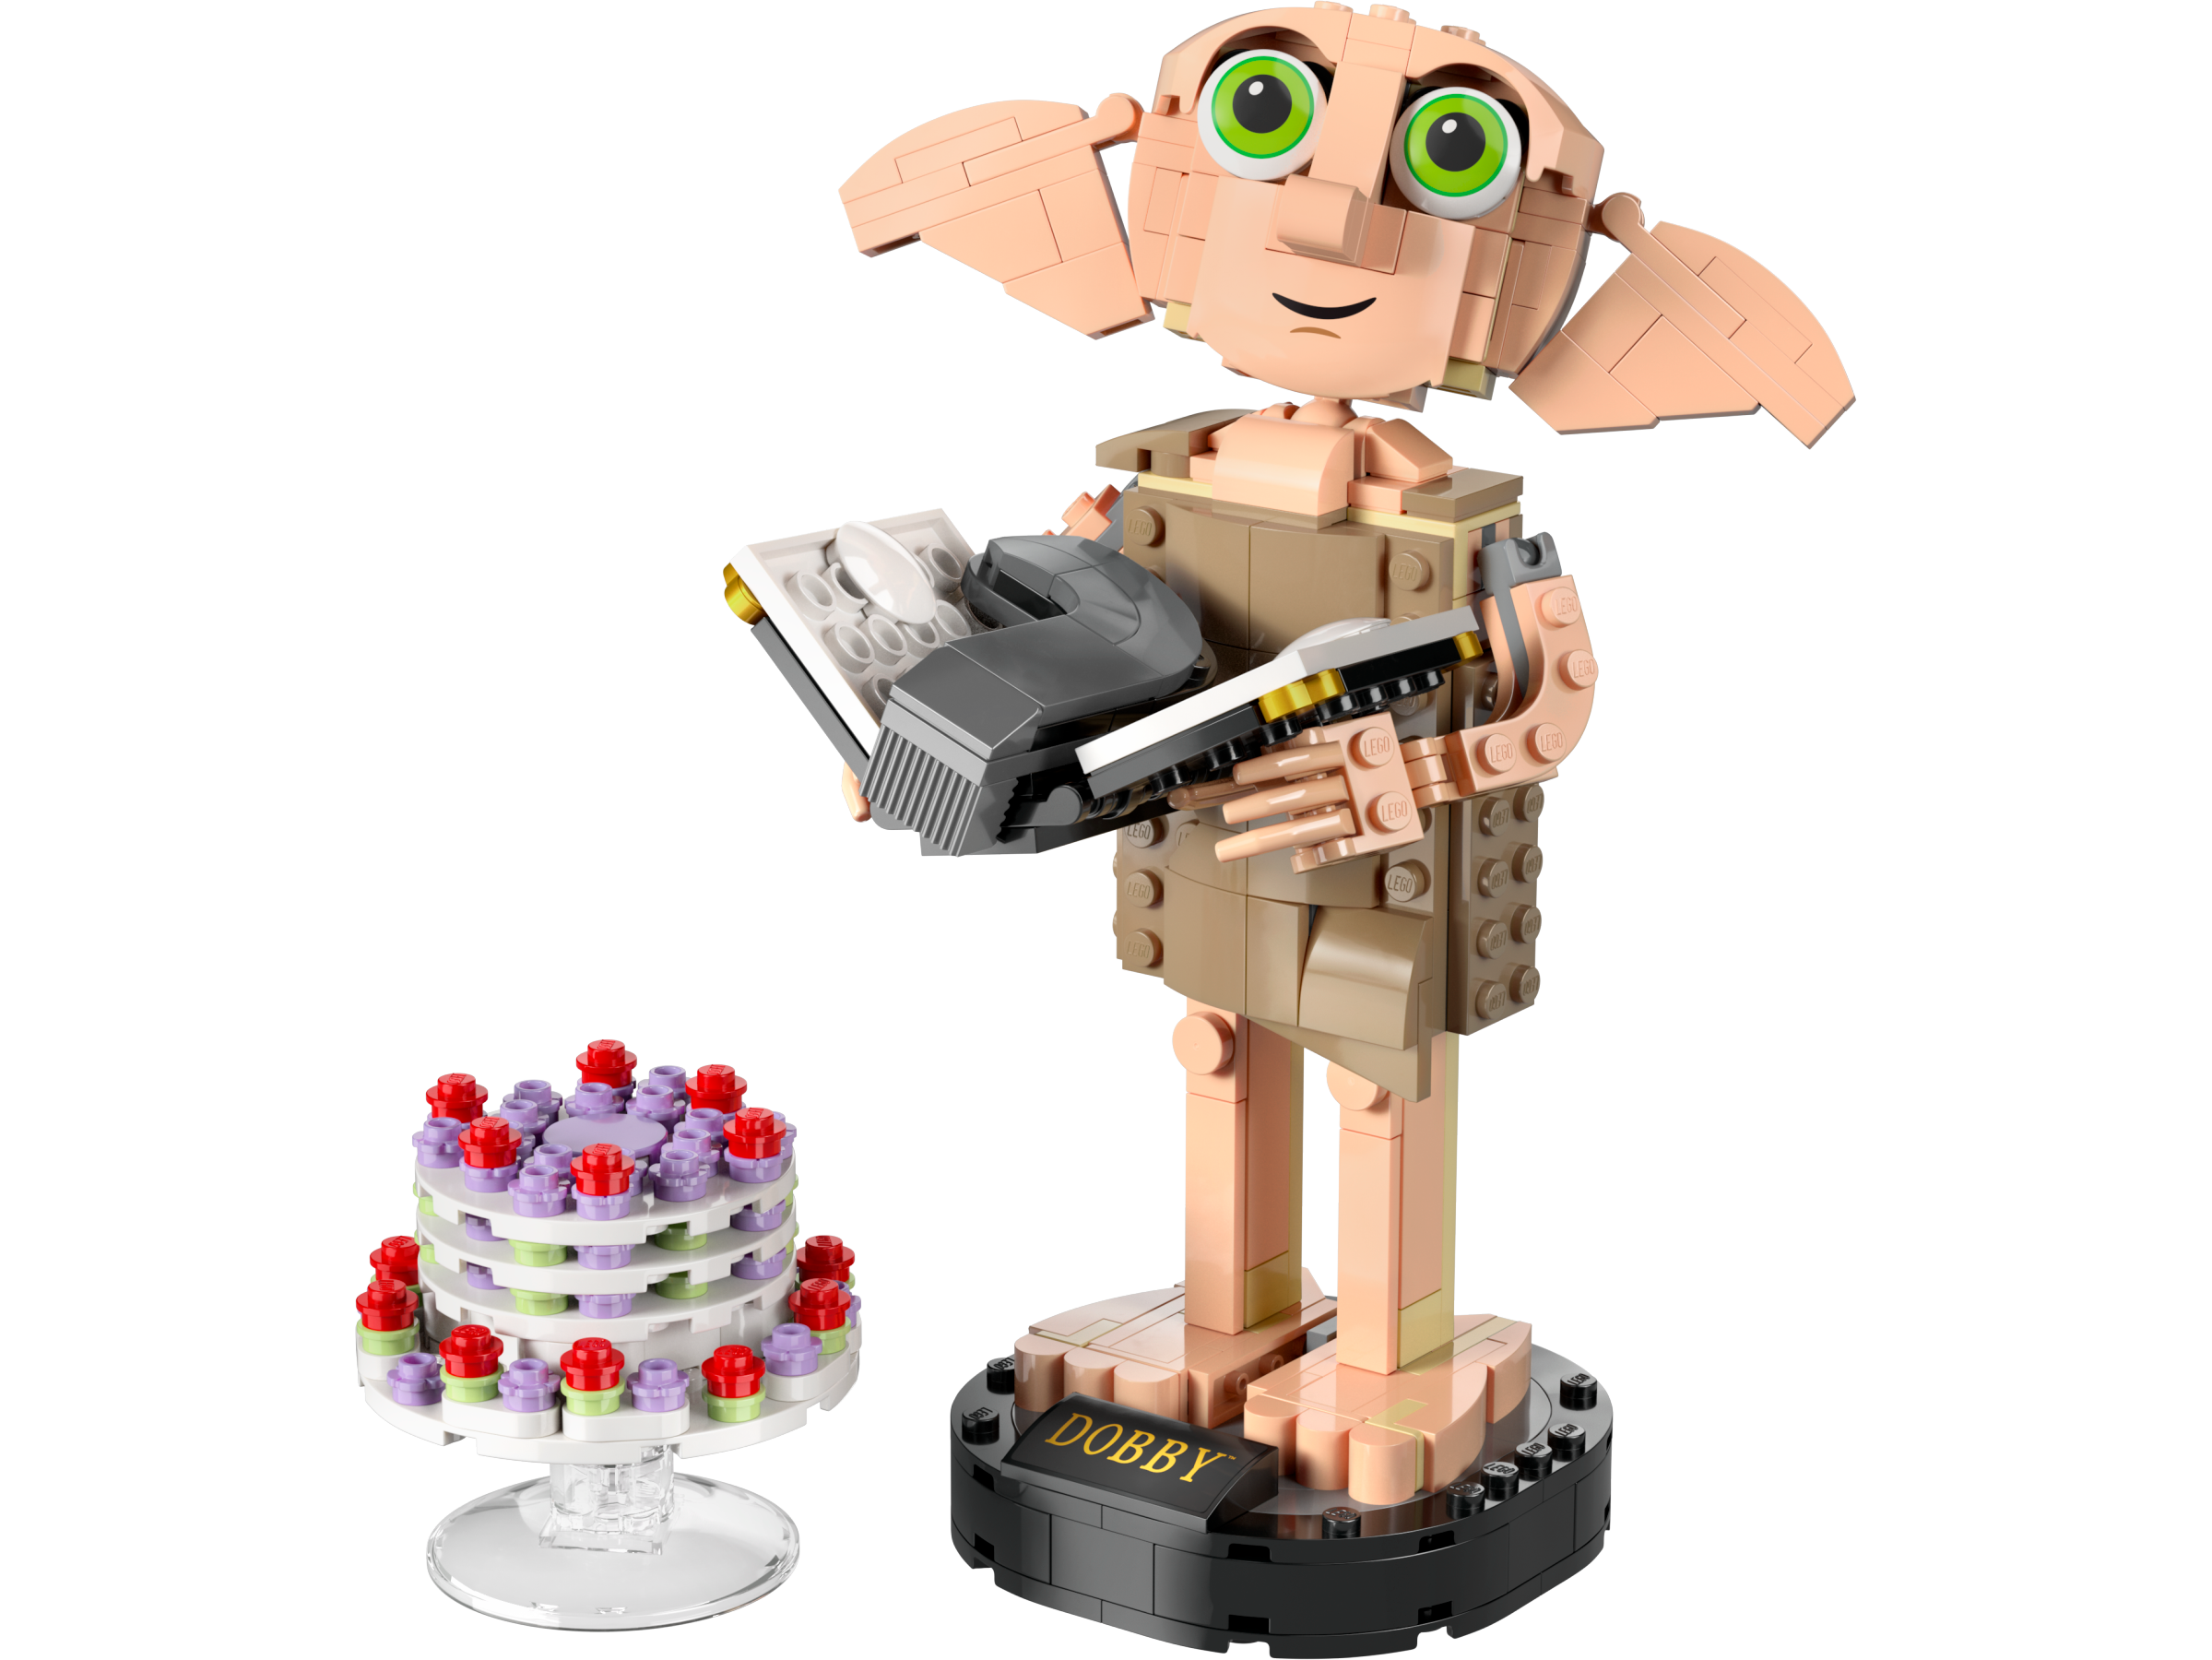 LEGO Harry Potter Dobby the House Elf - 76421